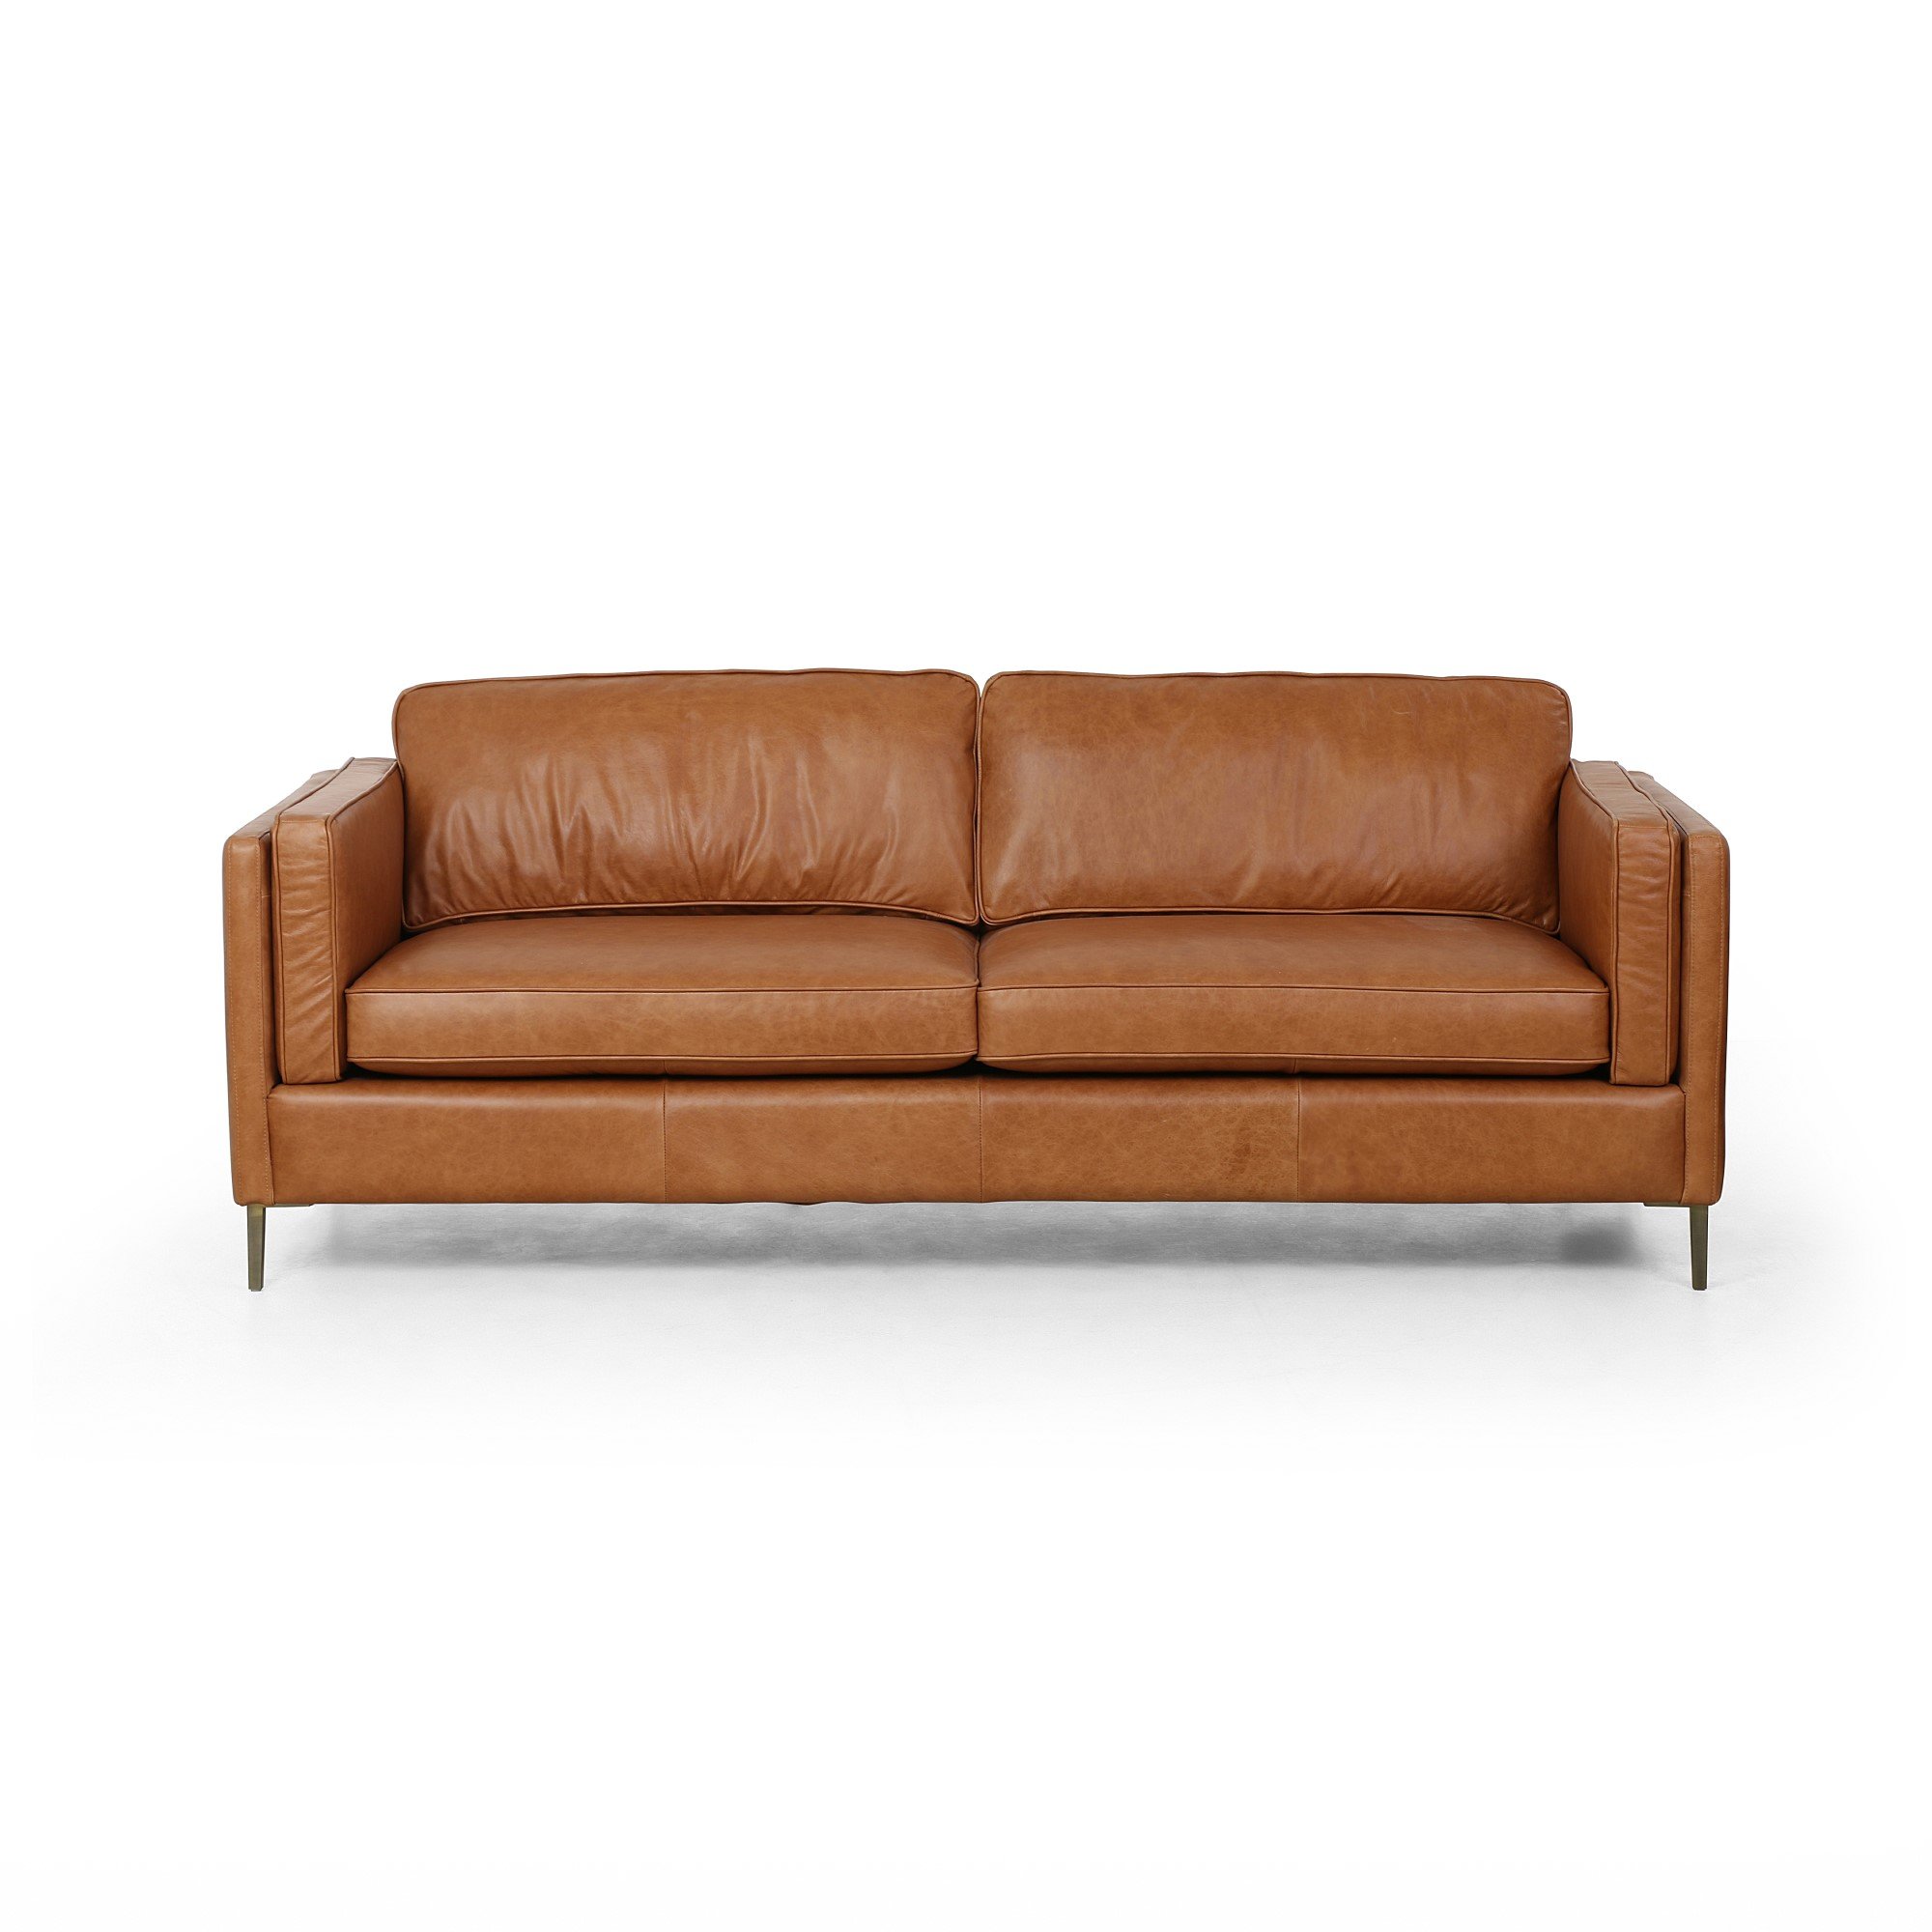 modern saddle brown leather sofa with metal legs